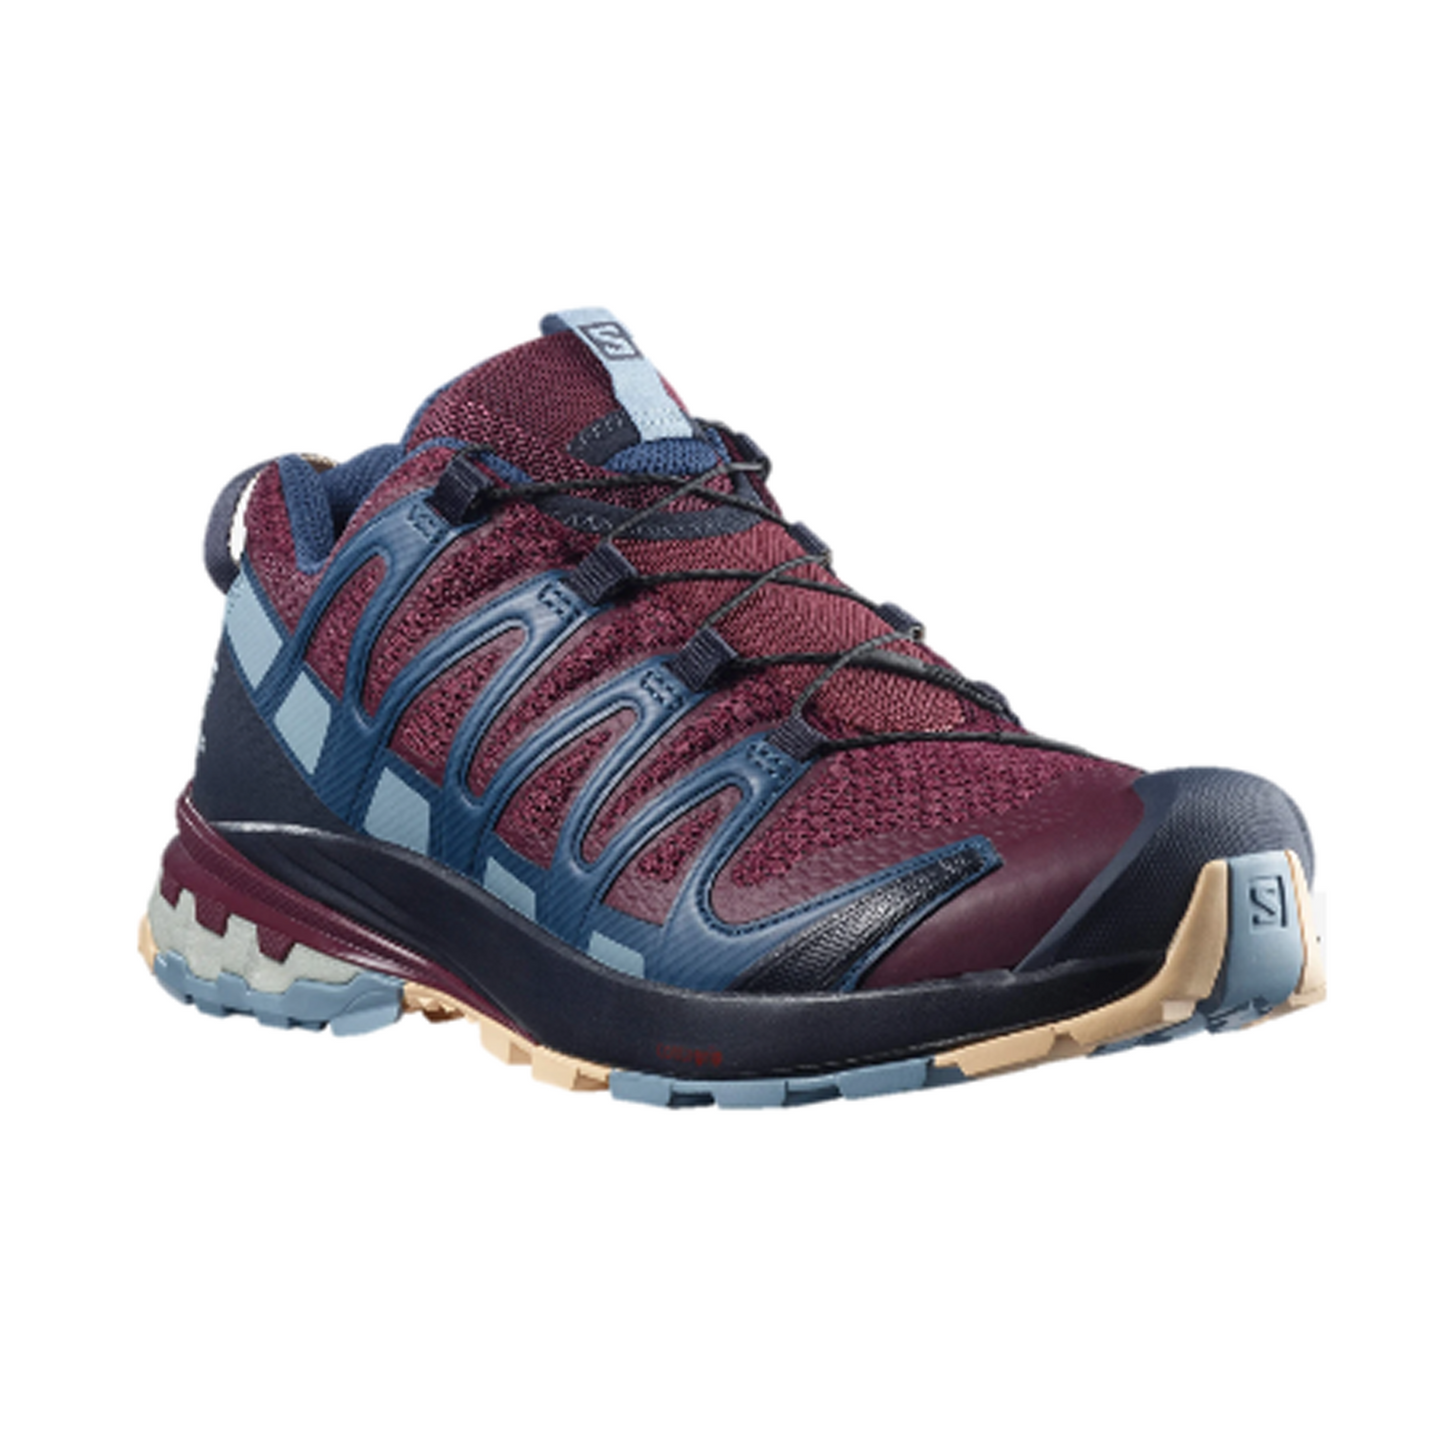 Women's Salomon XA Pro 3D trail running shoe.